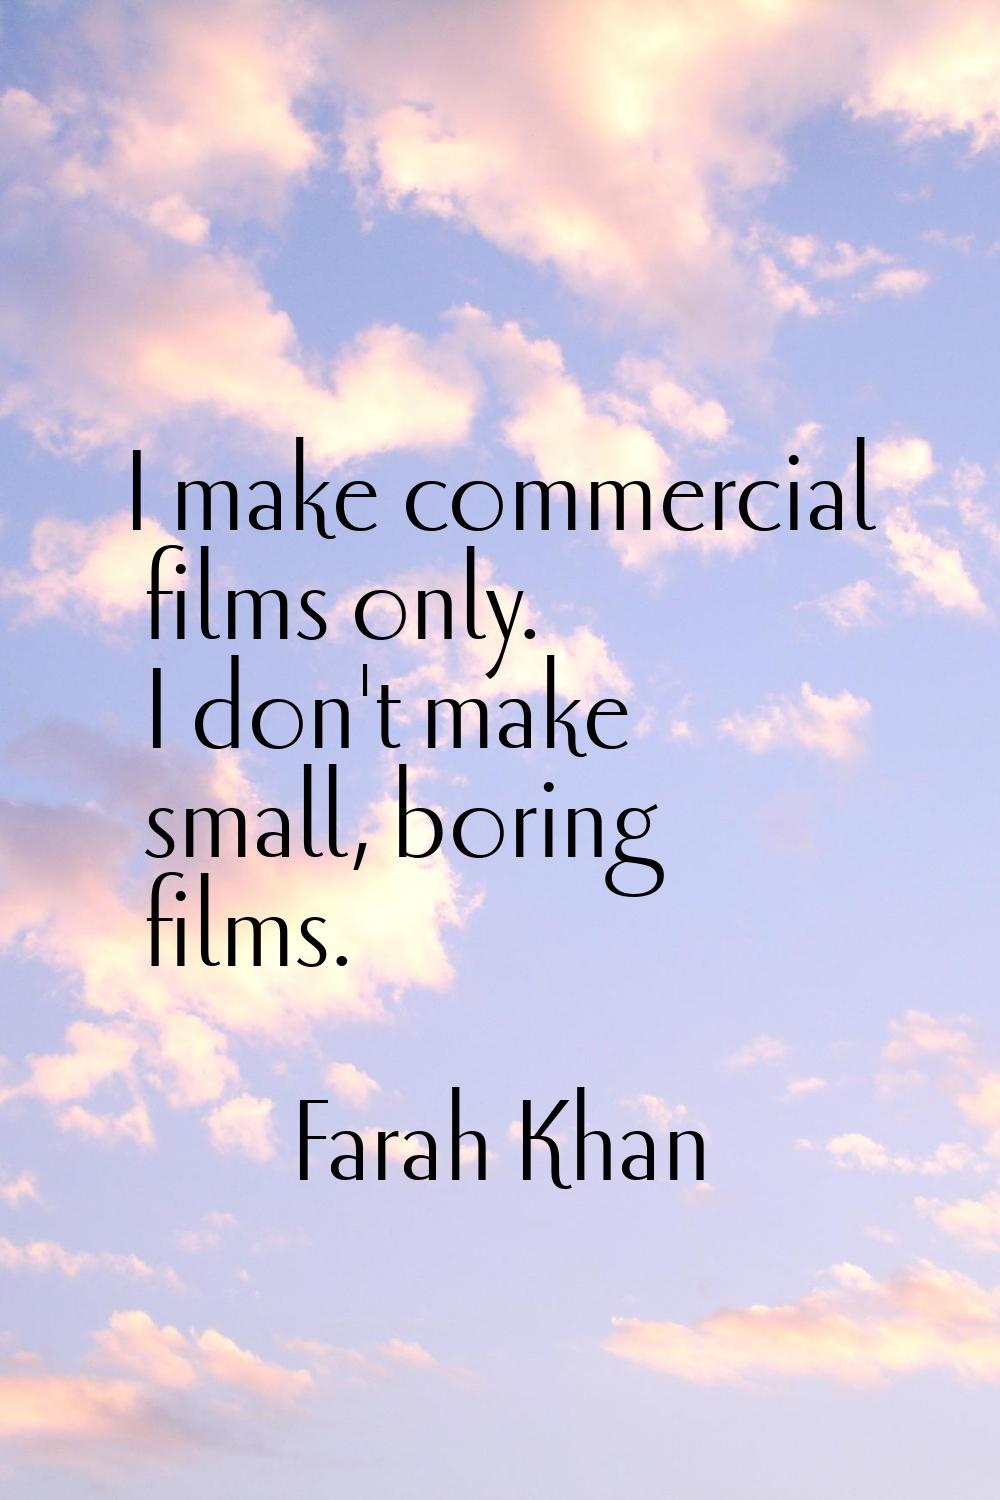 I make commercial films only. I don't make small, boring films.